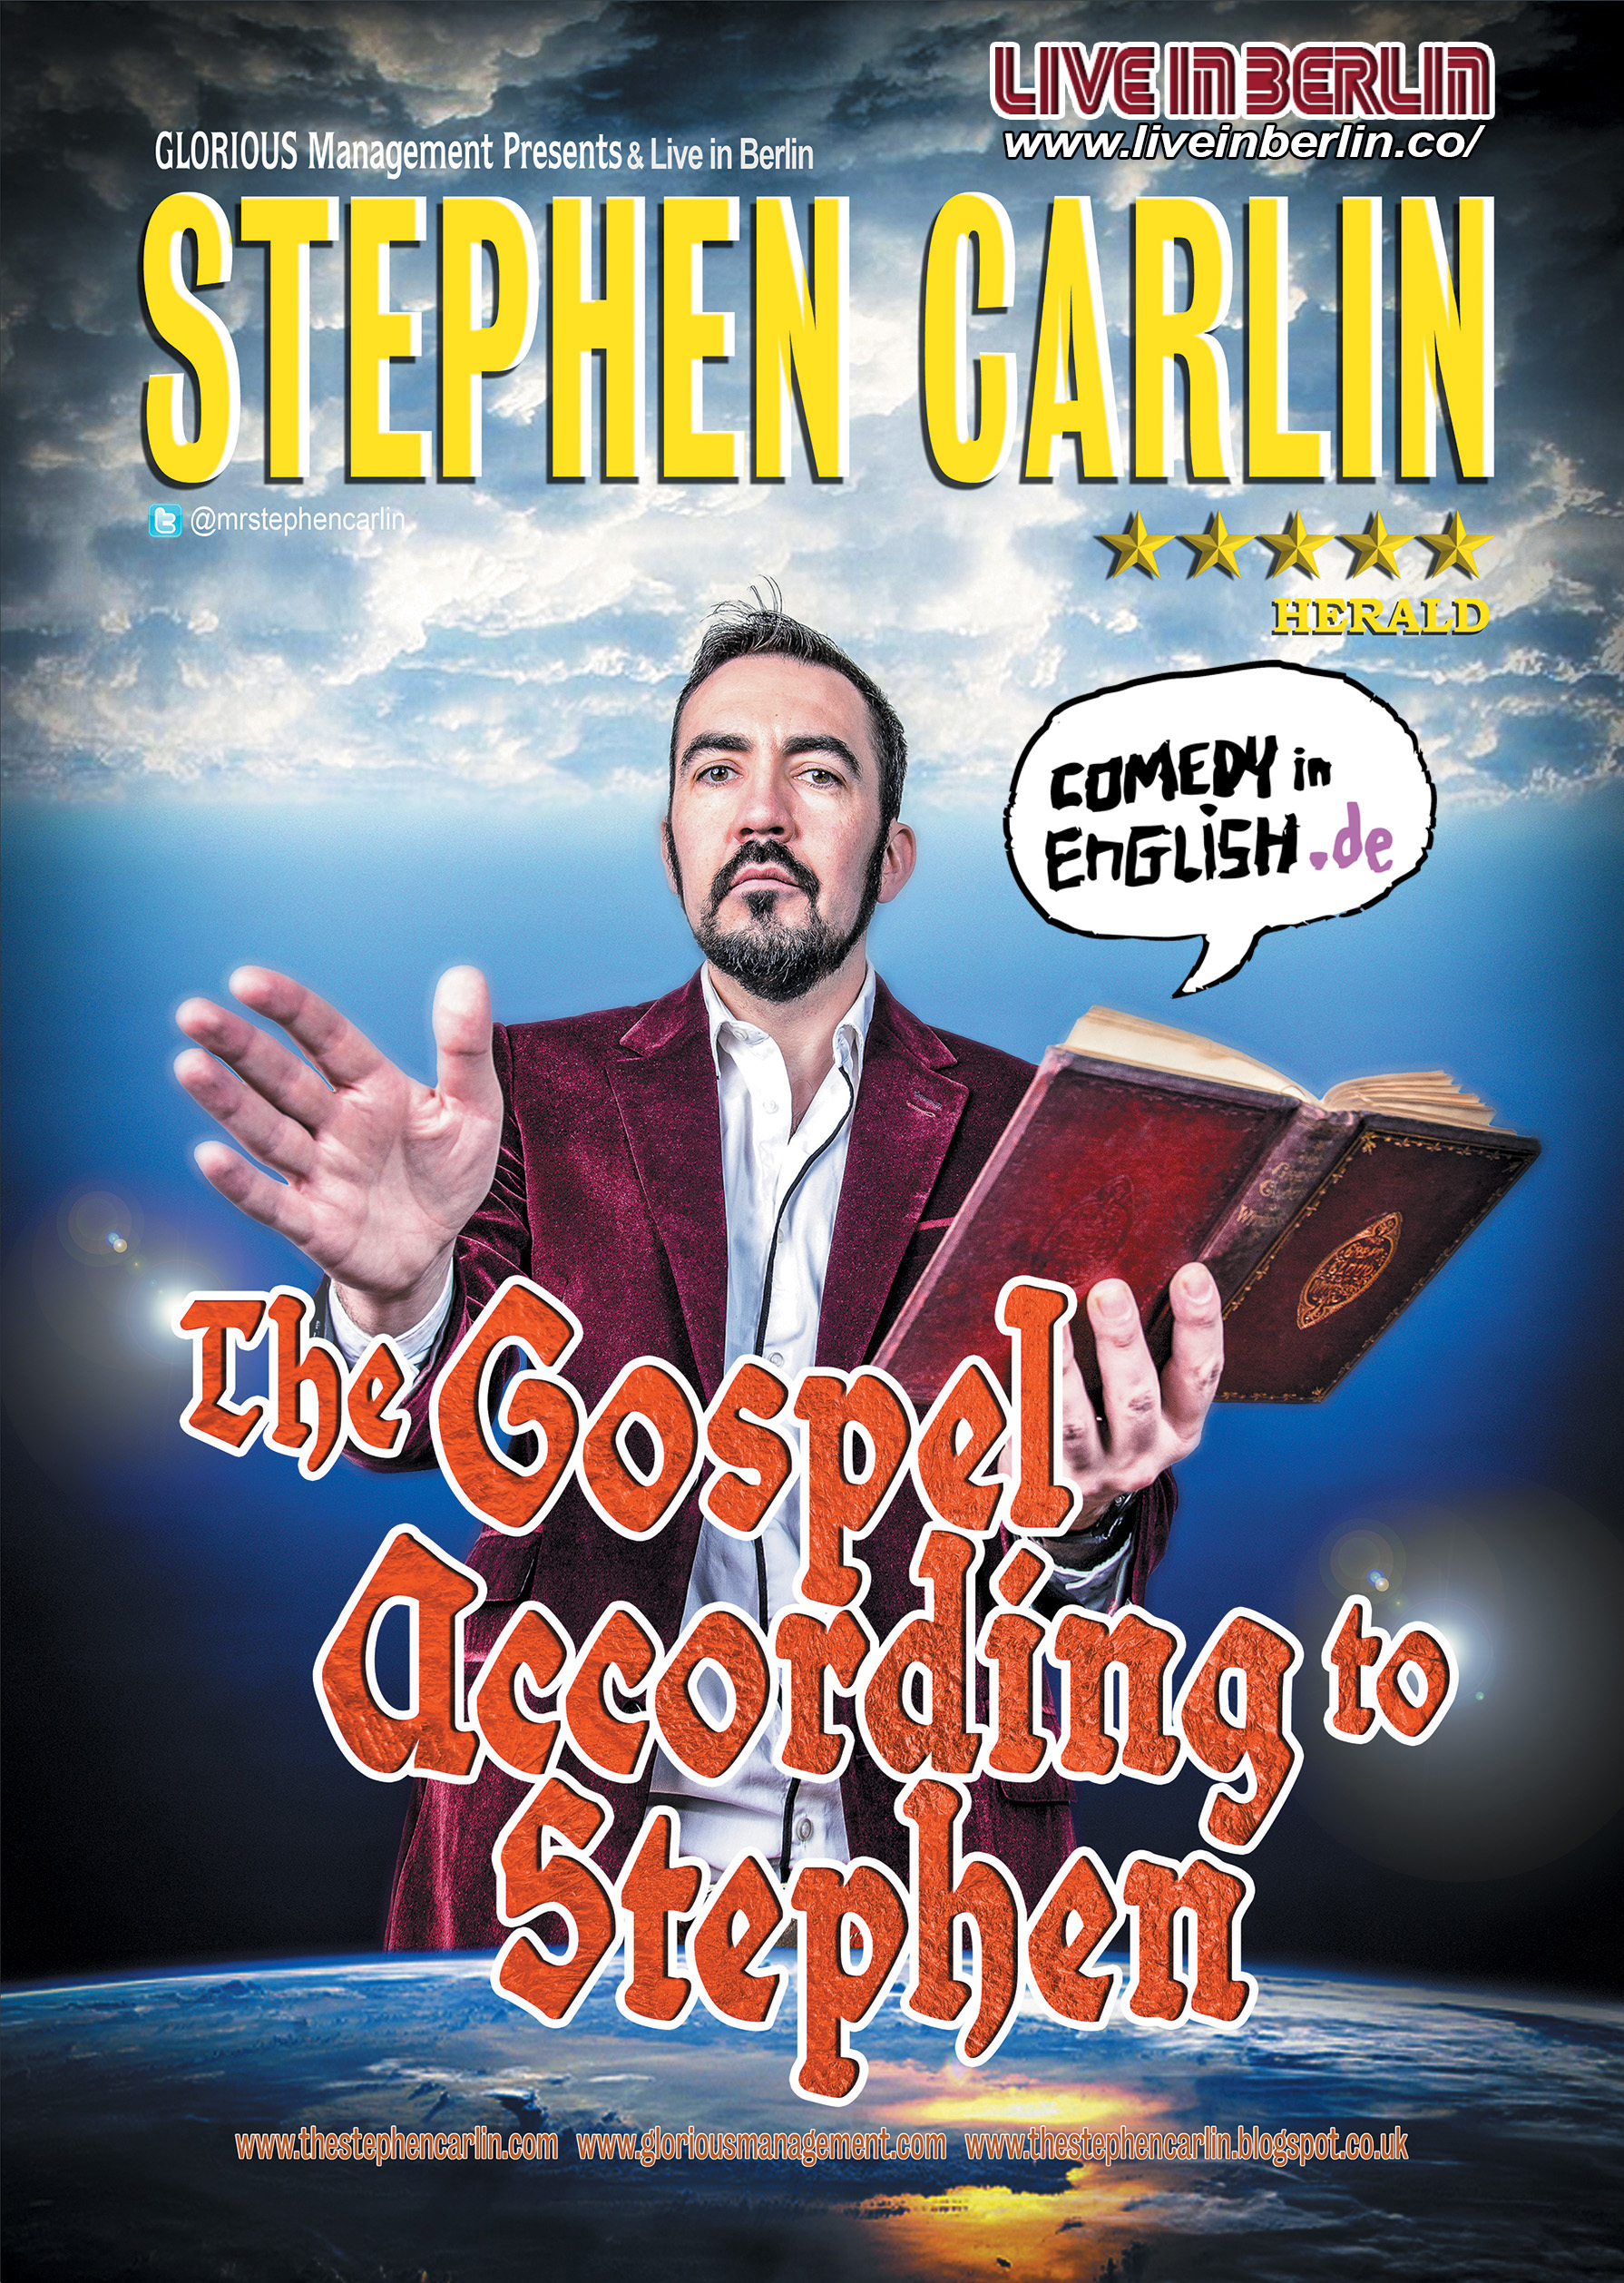 Stephen Carlin : The Gospel According to Stephen